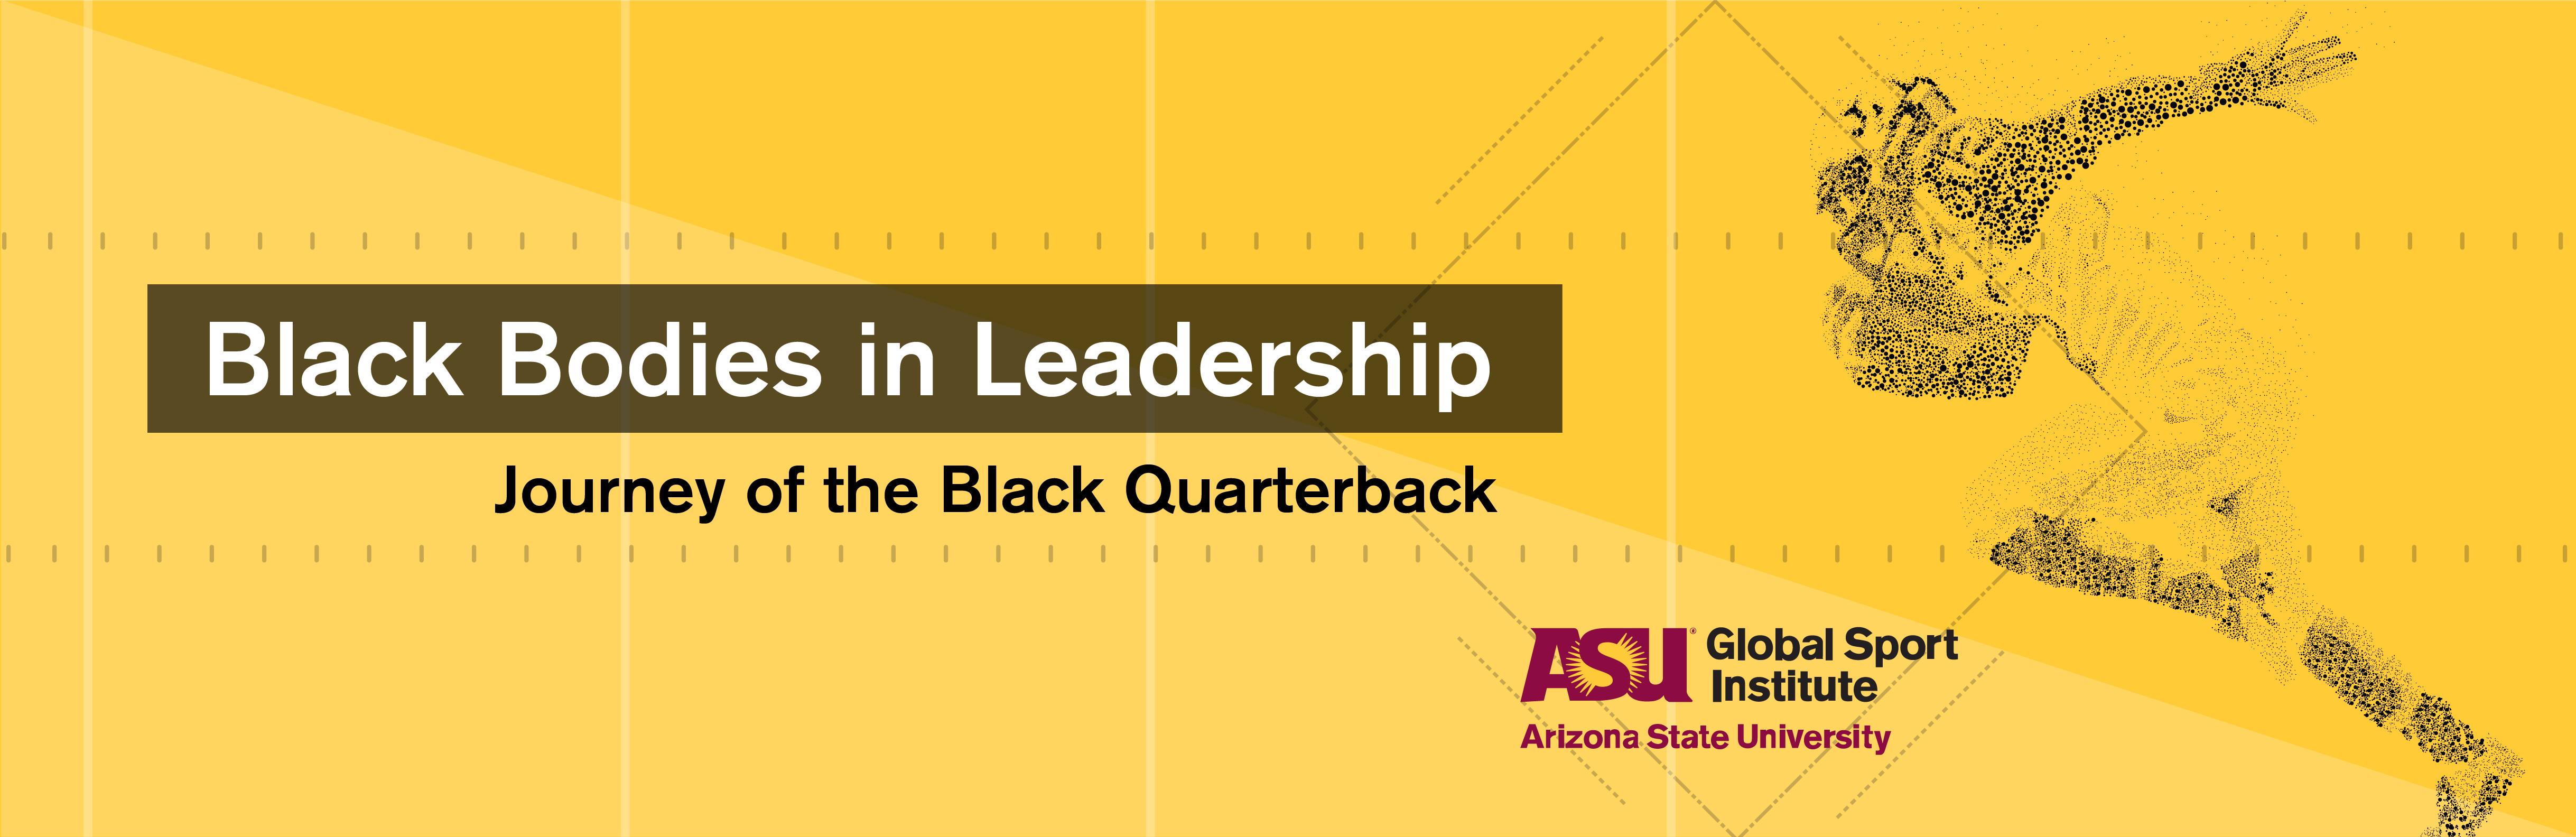 Black Bodies in Leadership: The Journey of the Black Quarterback